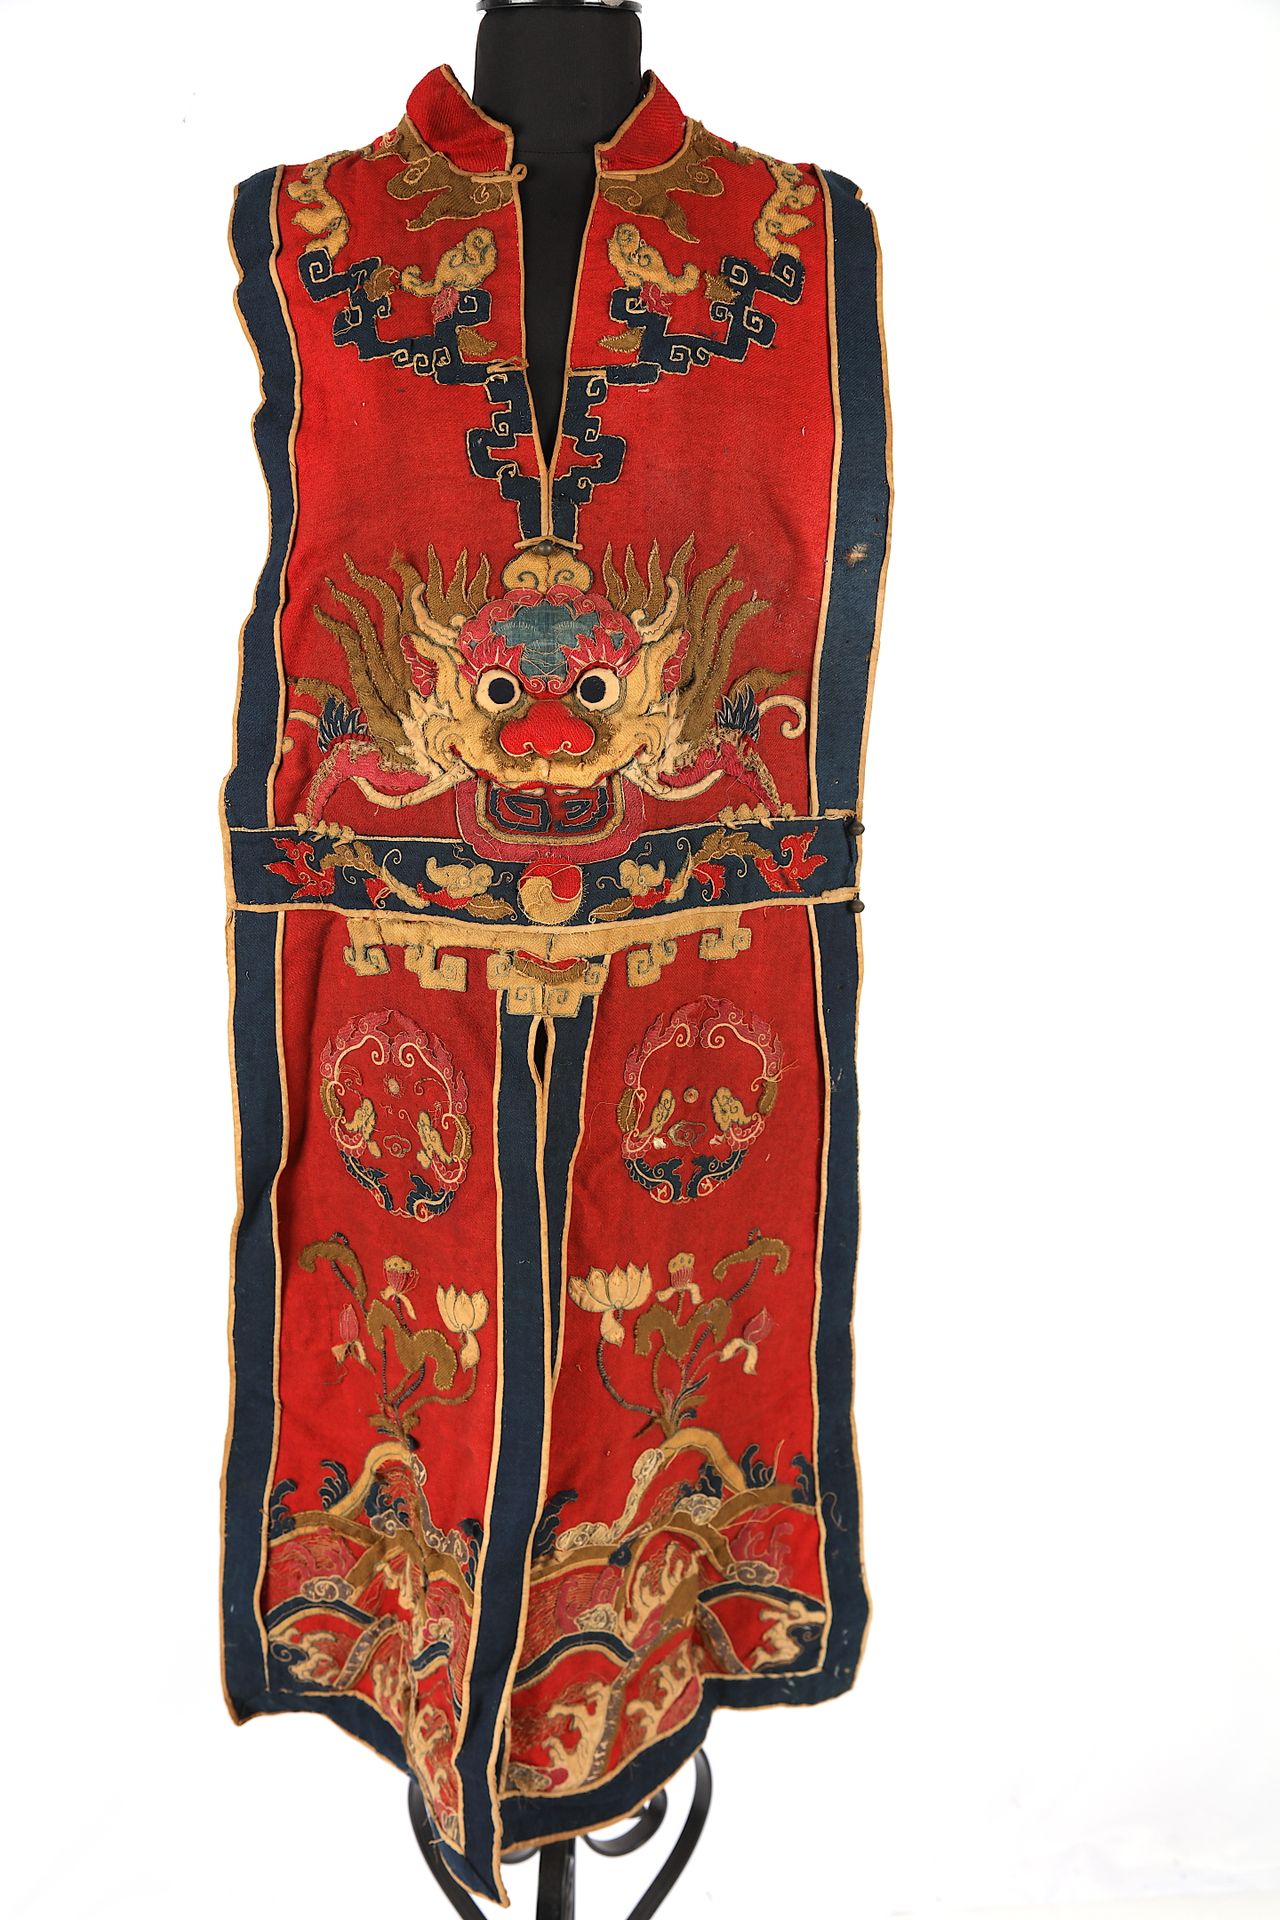 Null 
中国，
一件中国戏剧马甲，饰有浮雕刺绣，前后两幅 。118X45。十九世纪末二十世纪初Cabinet Portier，远东艺术物品专家，26 Bd &hellip;